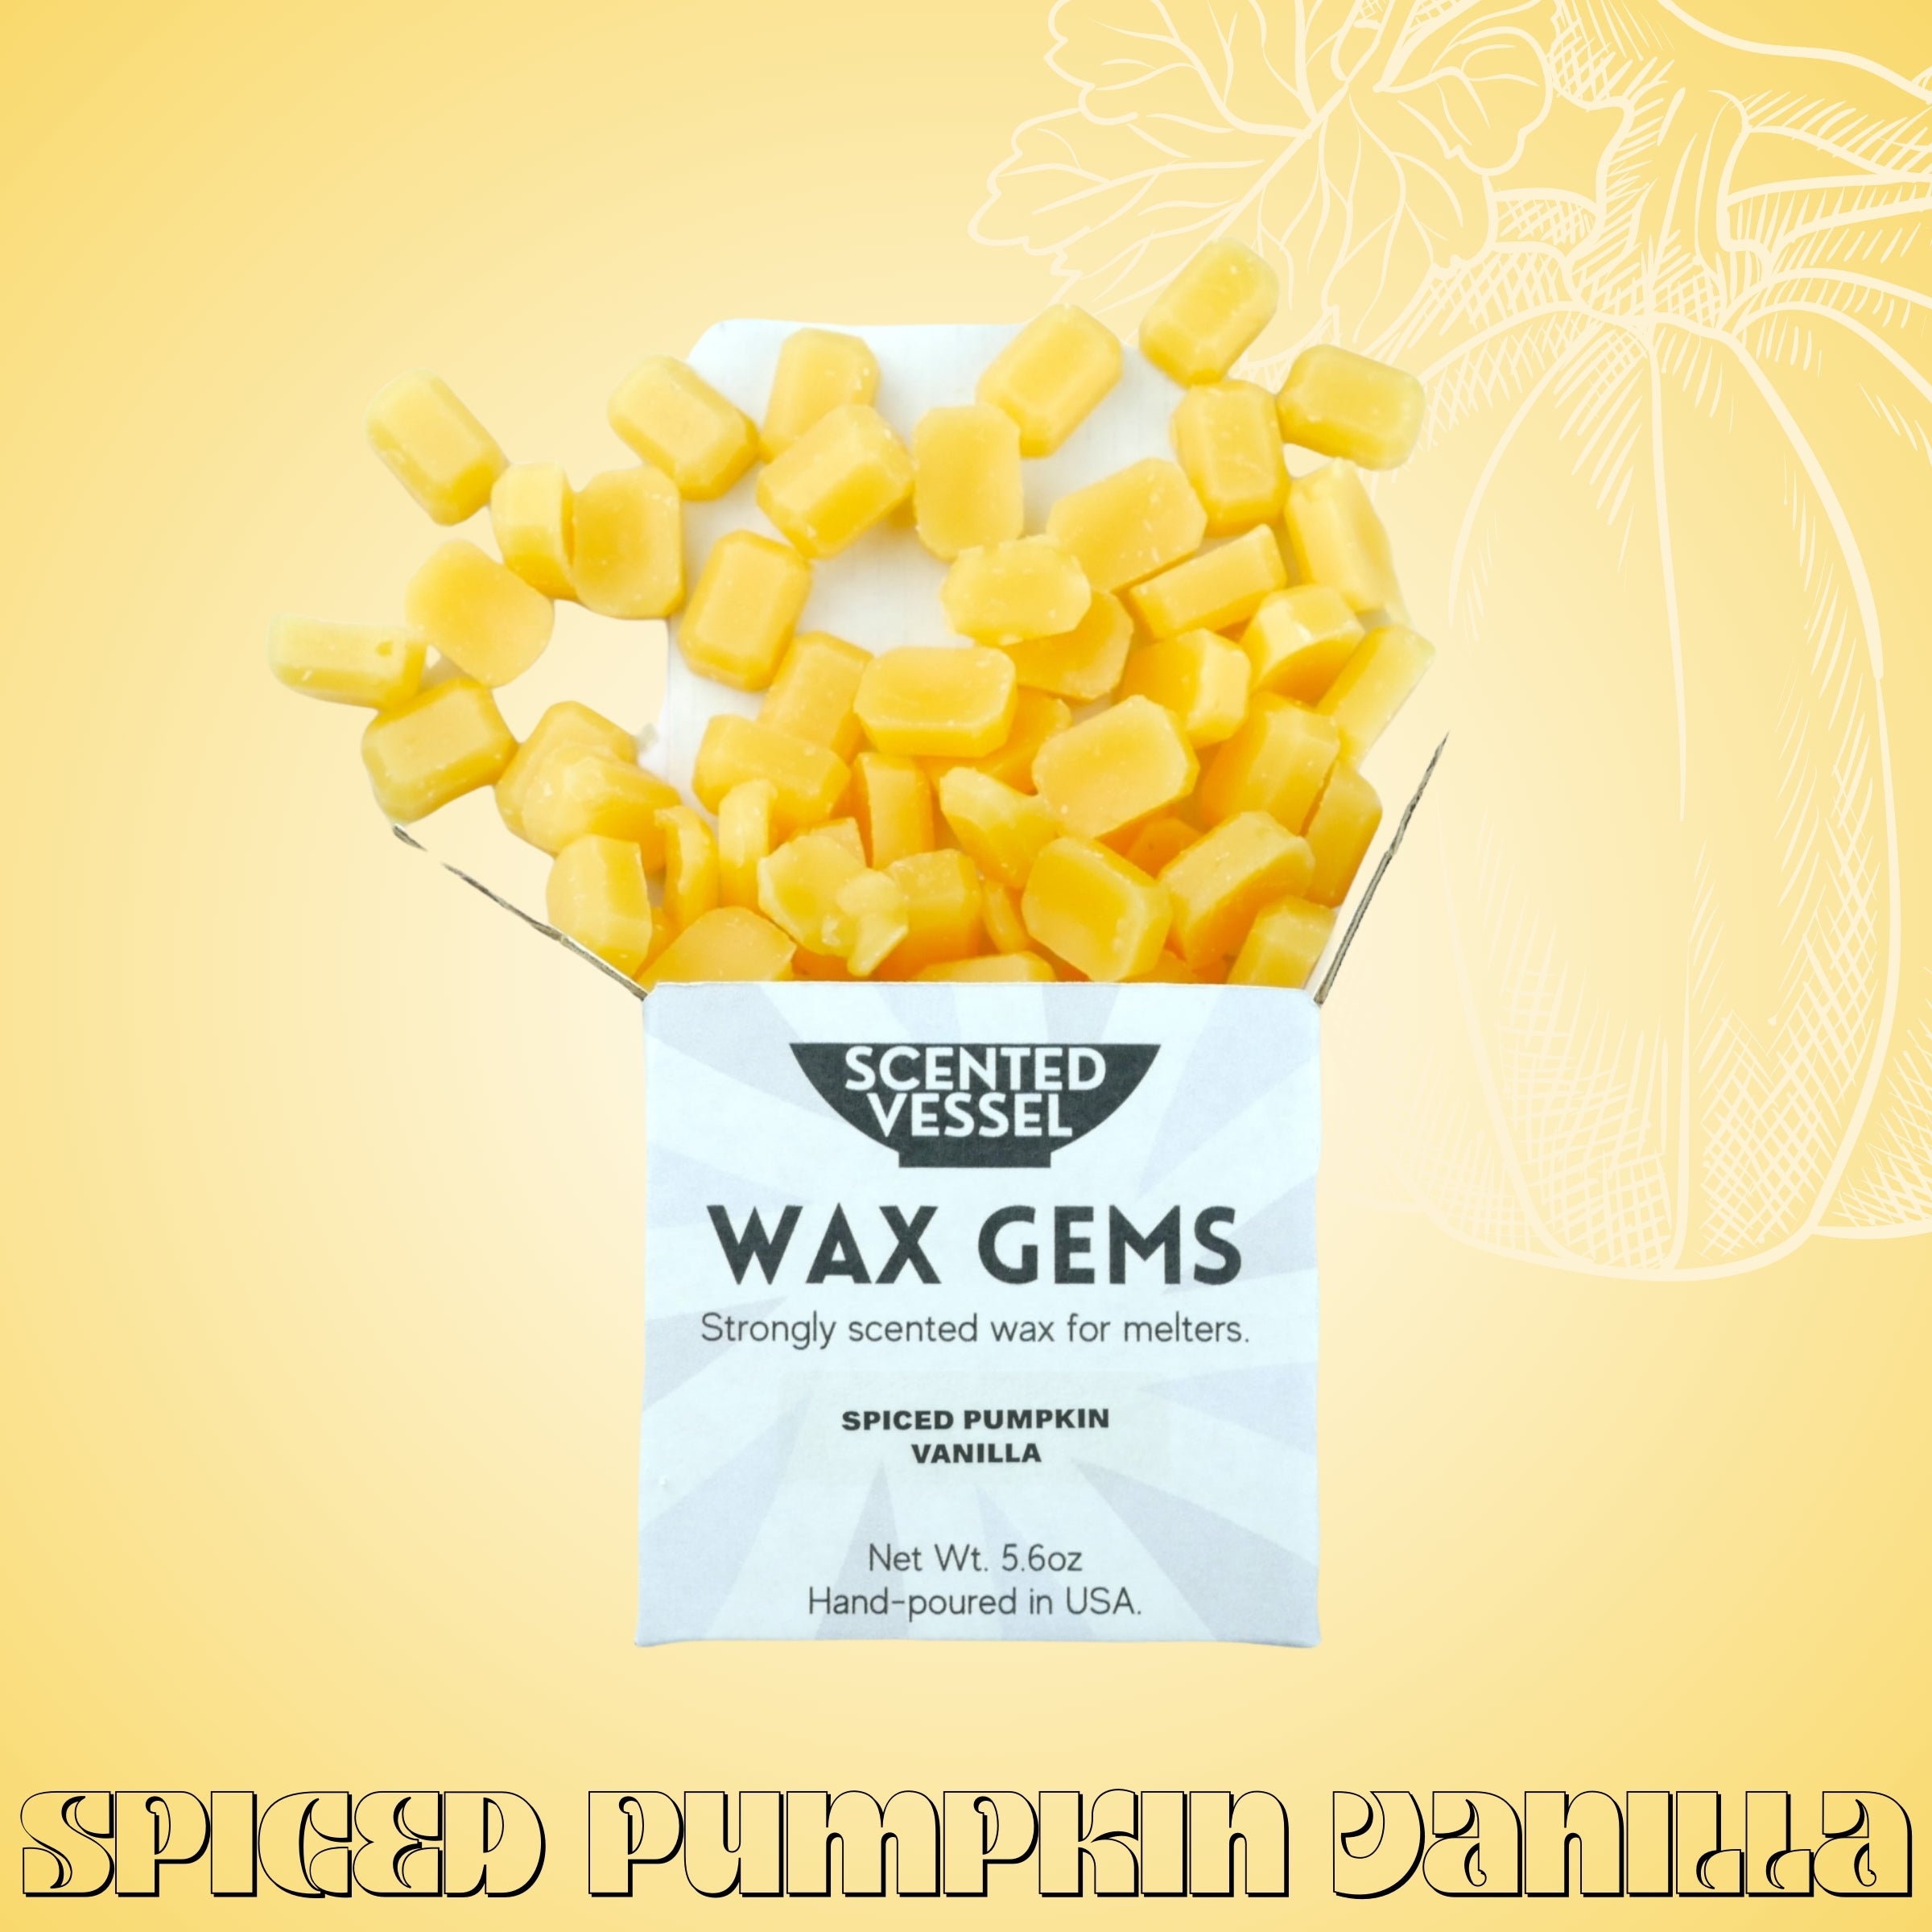 Spiced Pumpkin Vanilla 5.6oz Wax Gems by Scented Vessel